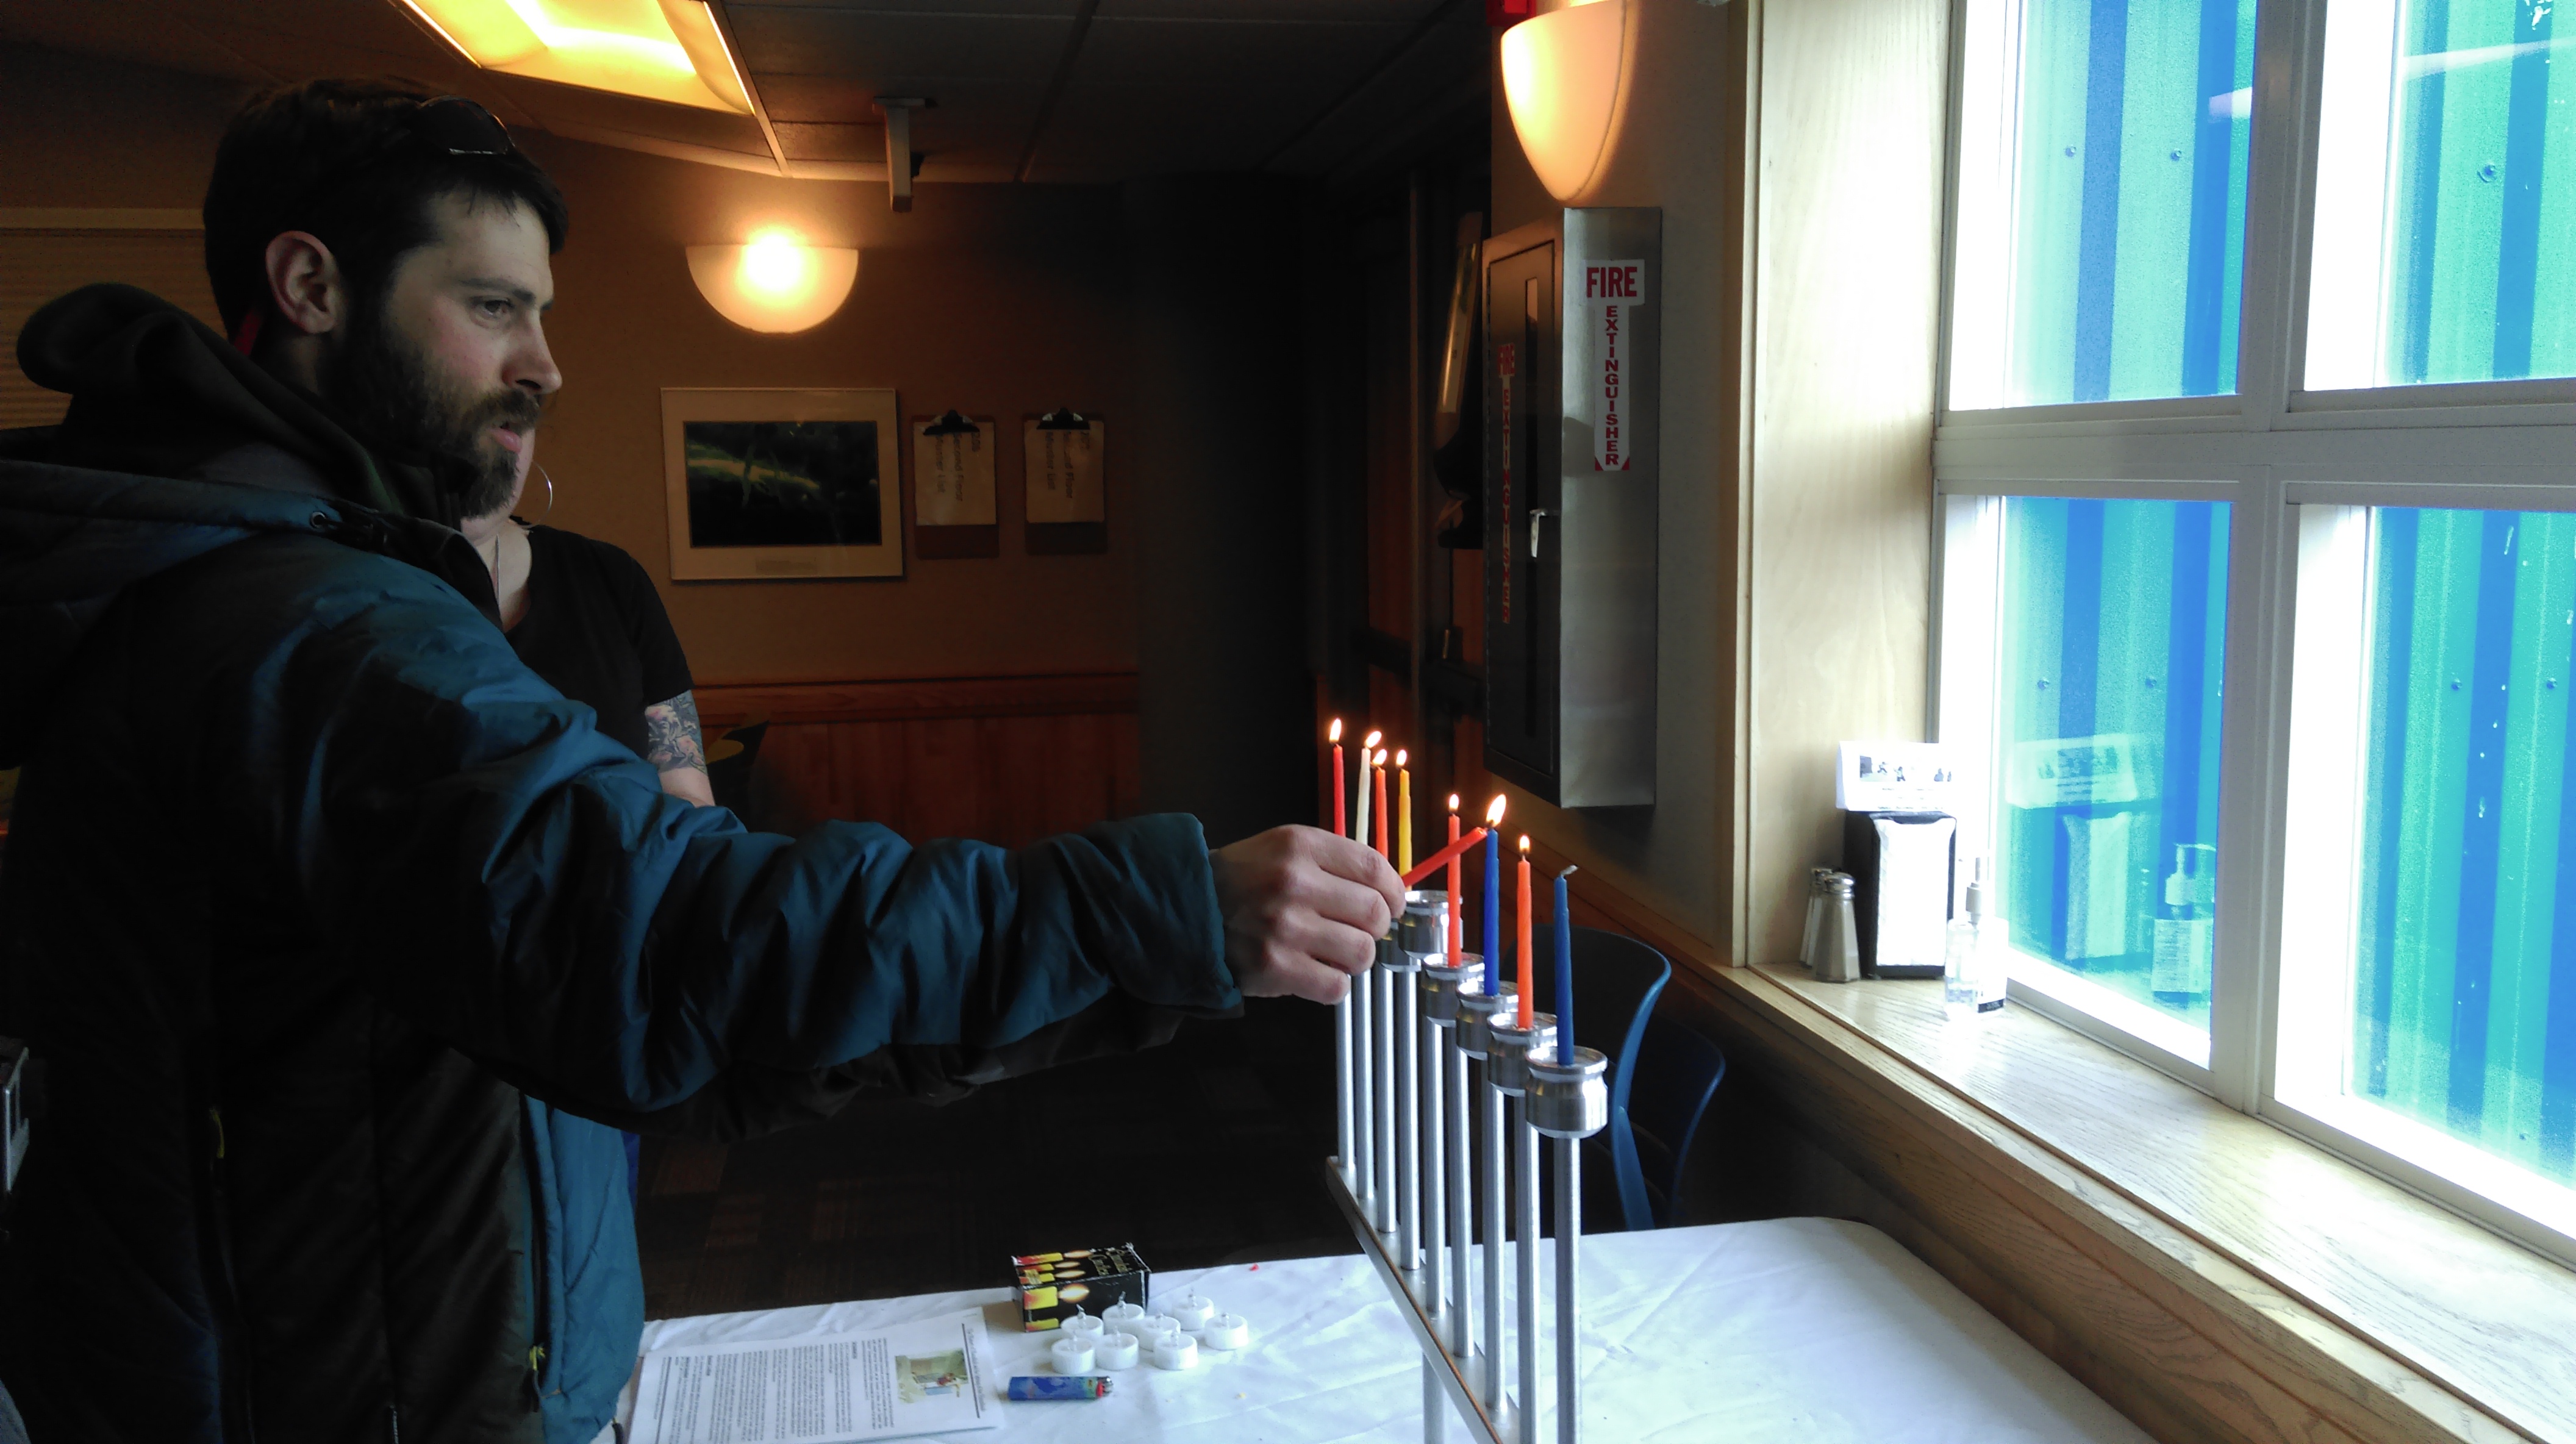 Lighting the Hanukkah Candles in McMurdo